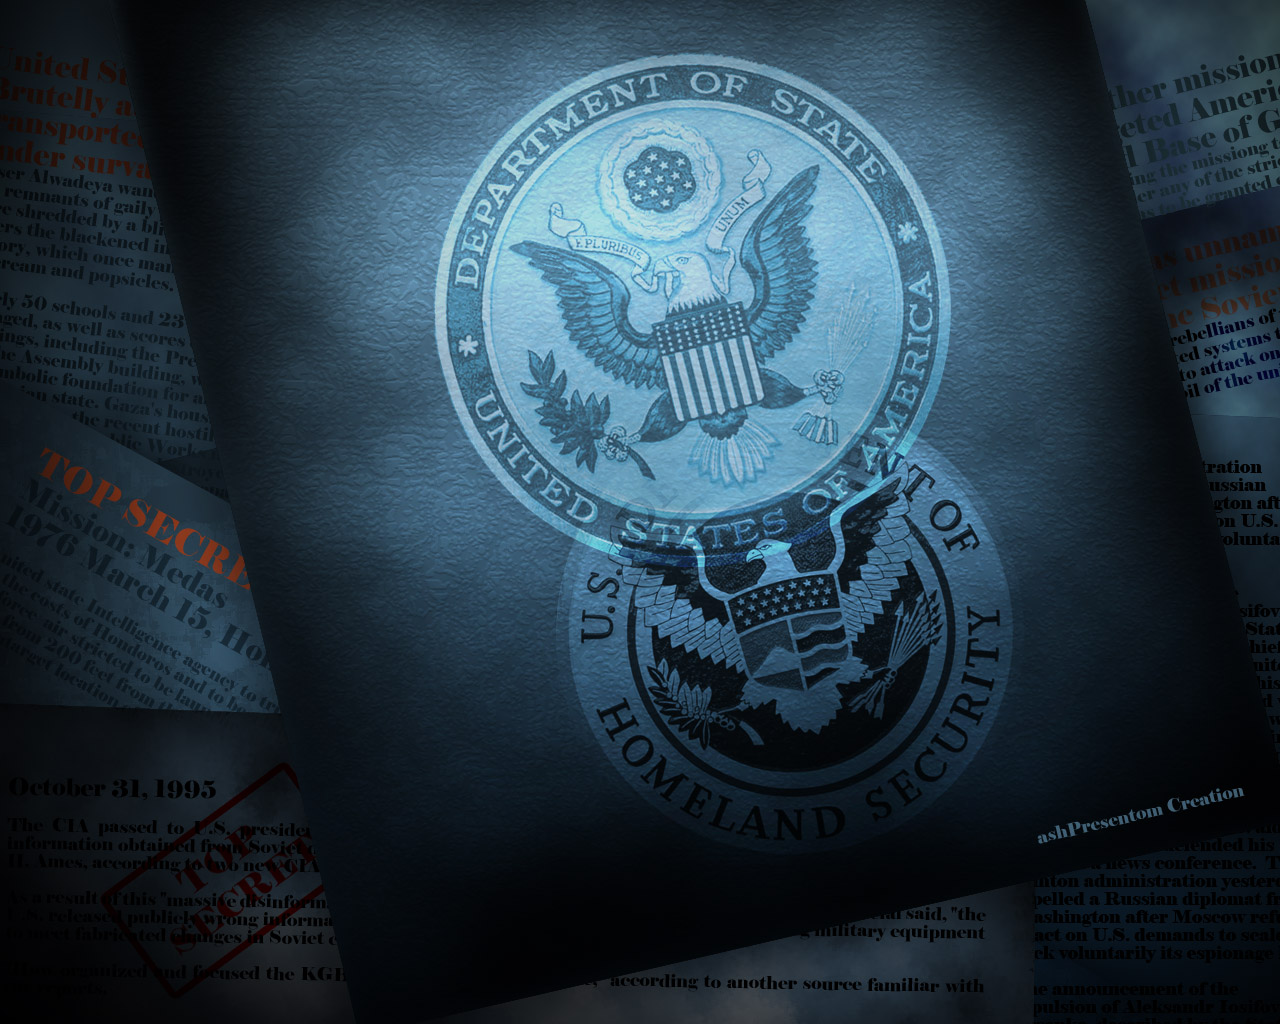 Top Secret US Intelligence by ashPresentom   Desktop Wallpaper 1280x1024